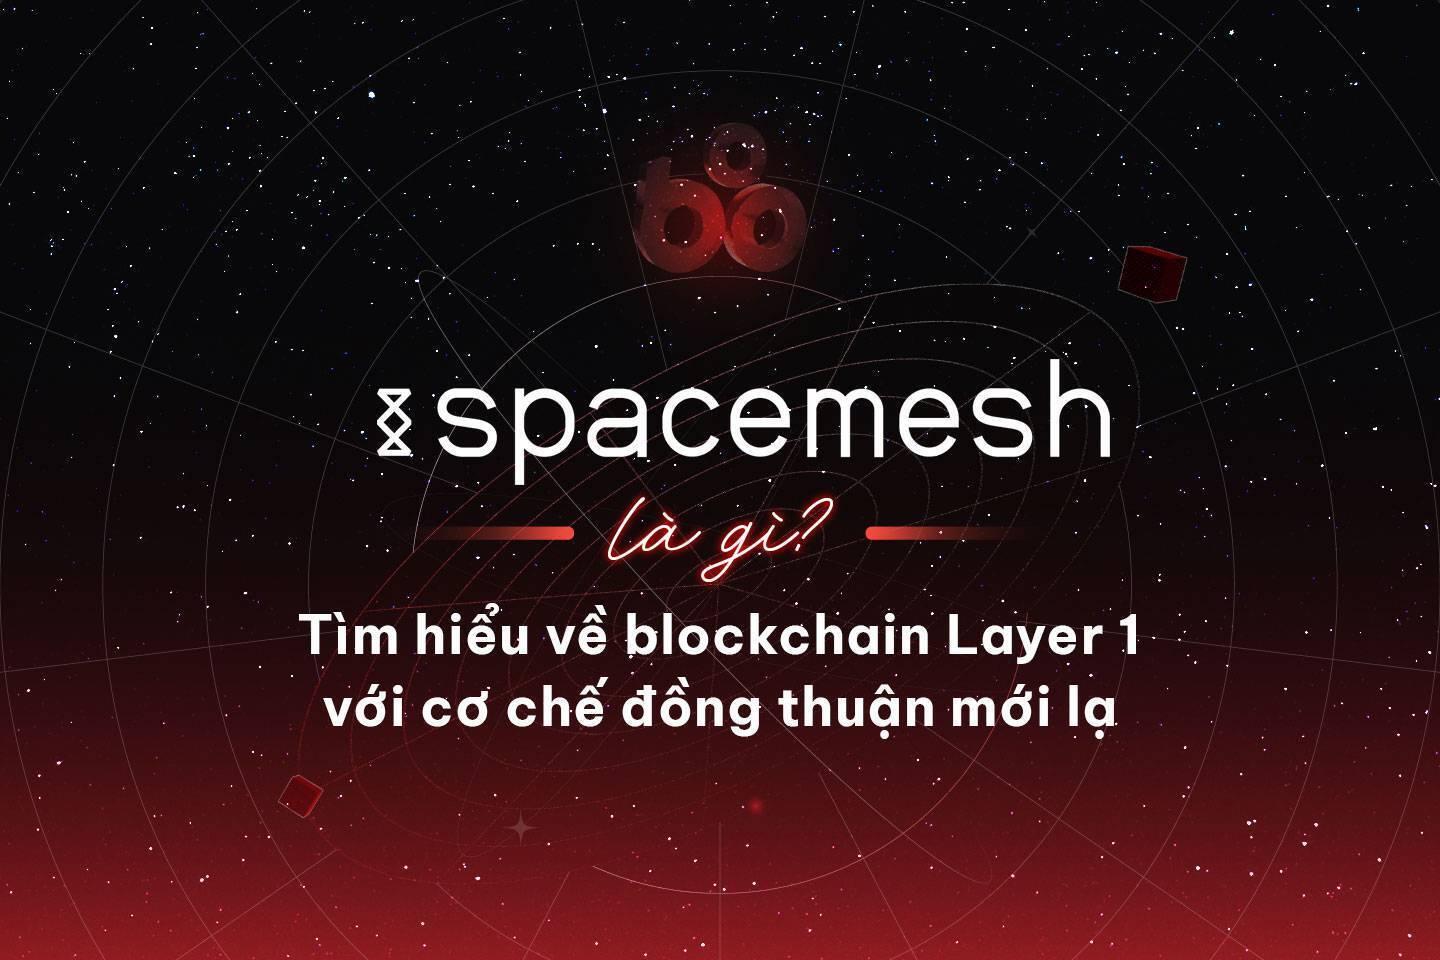 spacemesh-la-gi-tim-hieu-ve-blockchain-layer-1-voi-co-che-dong-thuan-moi-la